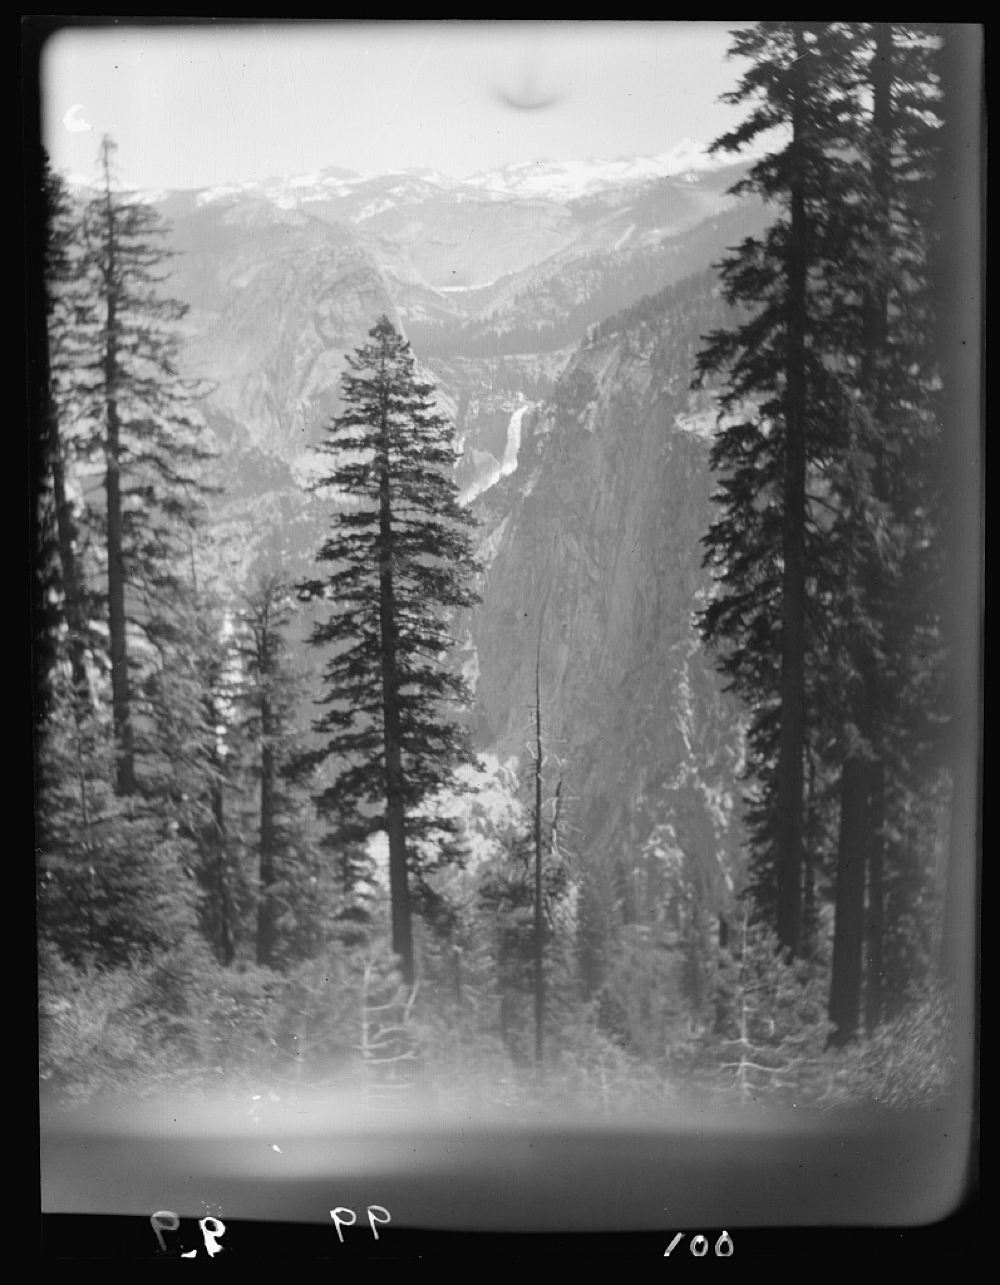 Travel views of Yosemite National Park